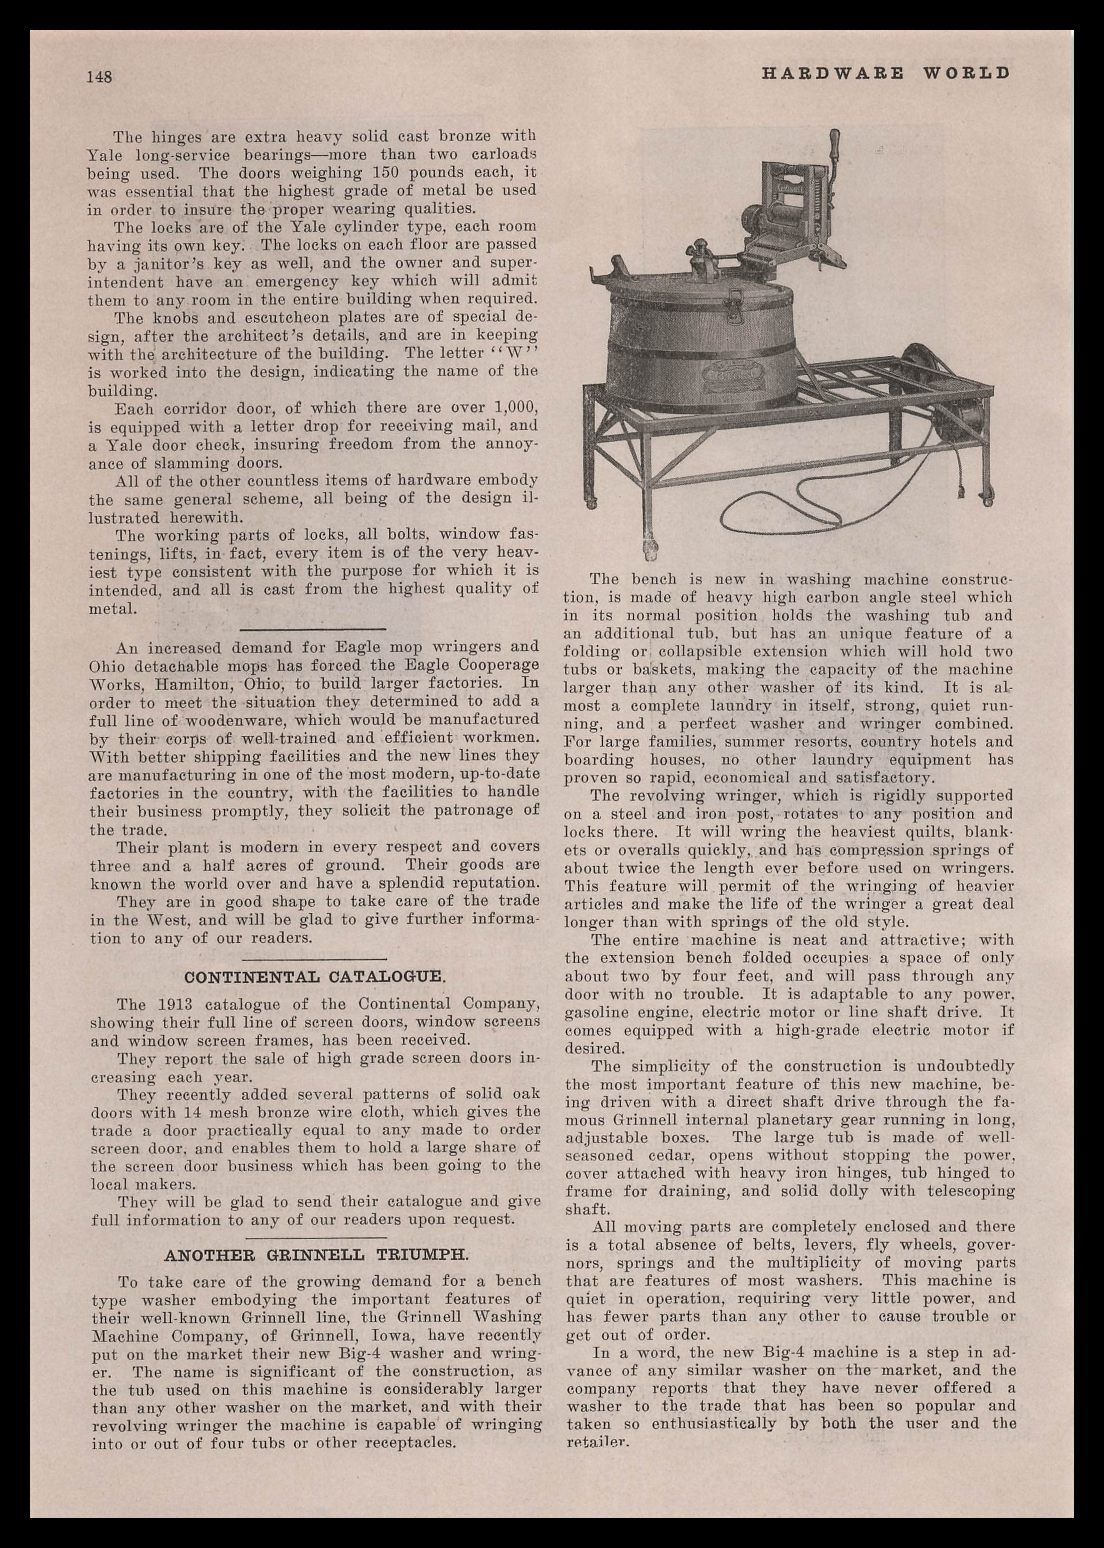 1912 Grinnell Washing Machine Company Iowa Big-4 Washer Article Vintage Print Ad